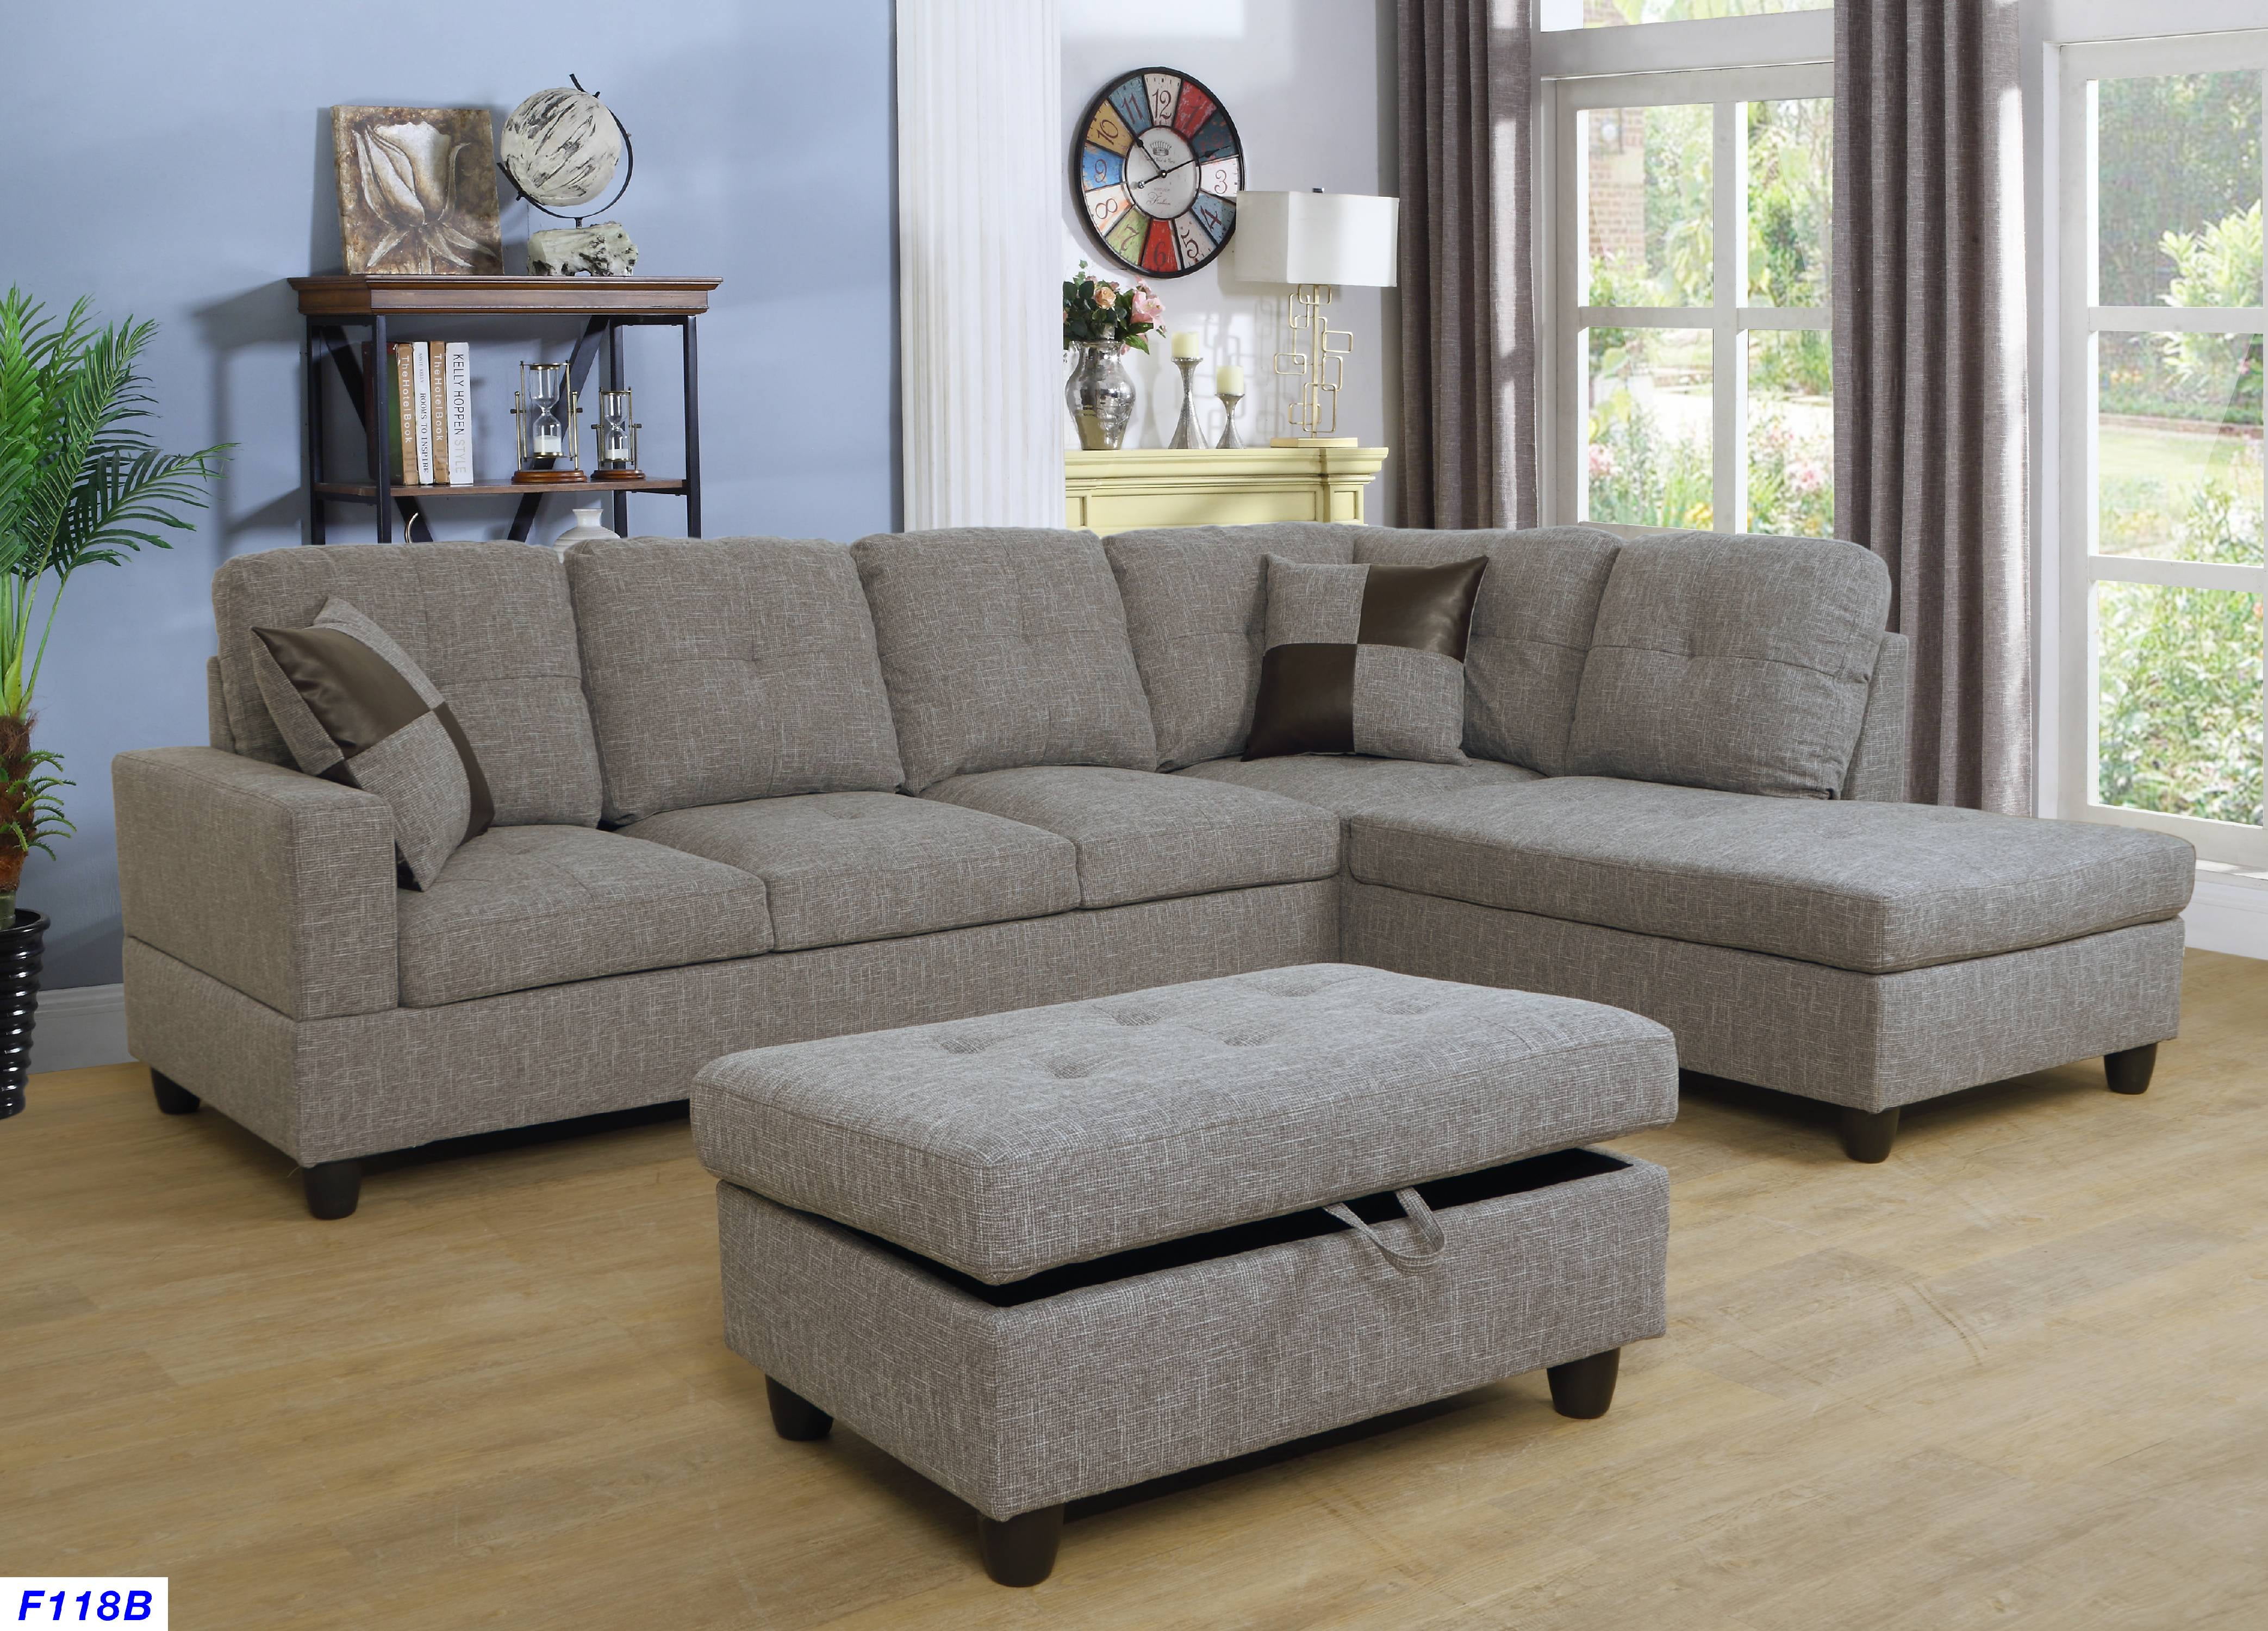 ASHEY Furniture - L Shape Sectional Sofa Set with Storage Ottoman